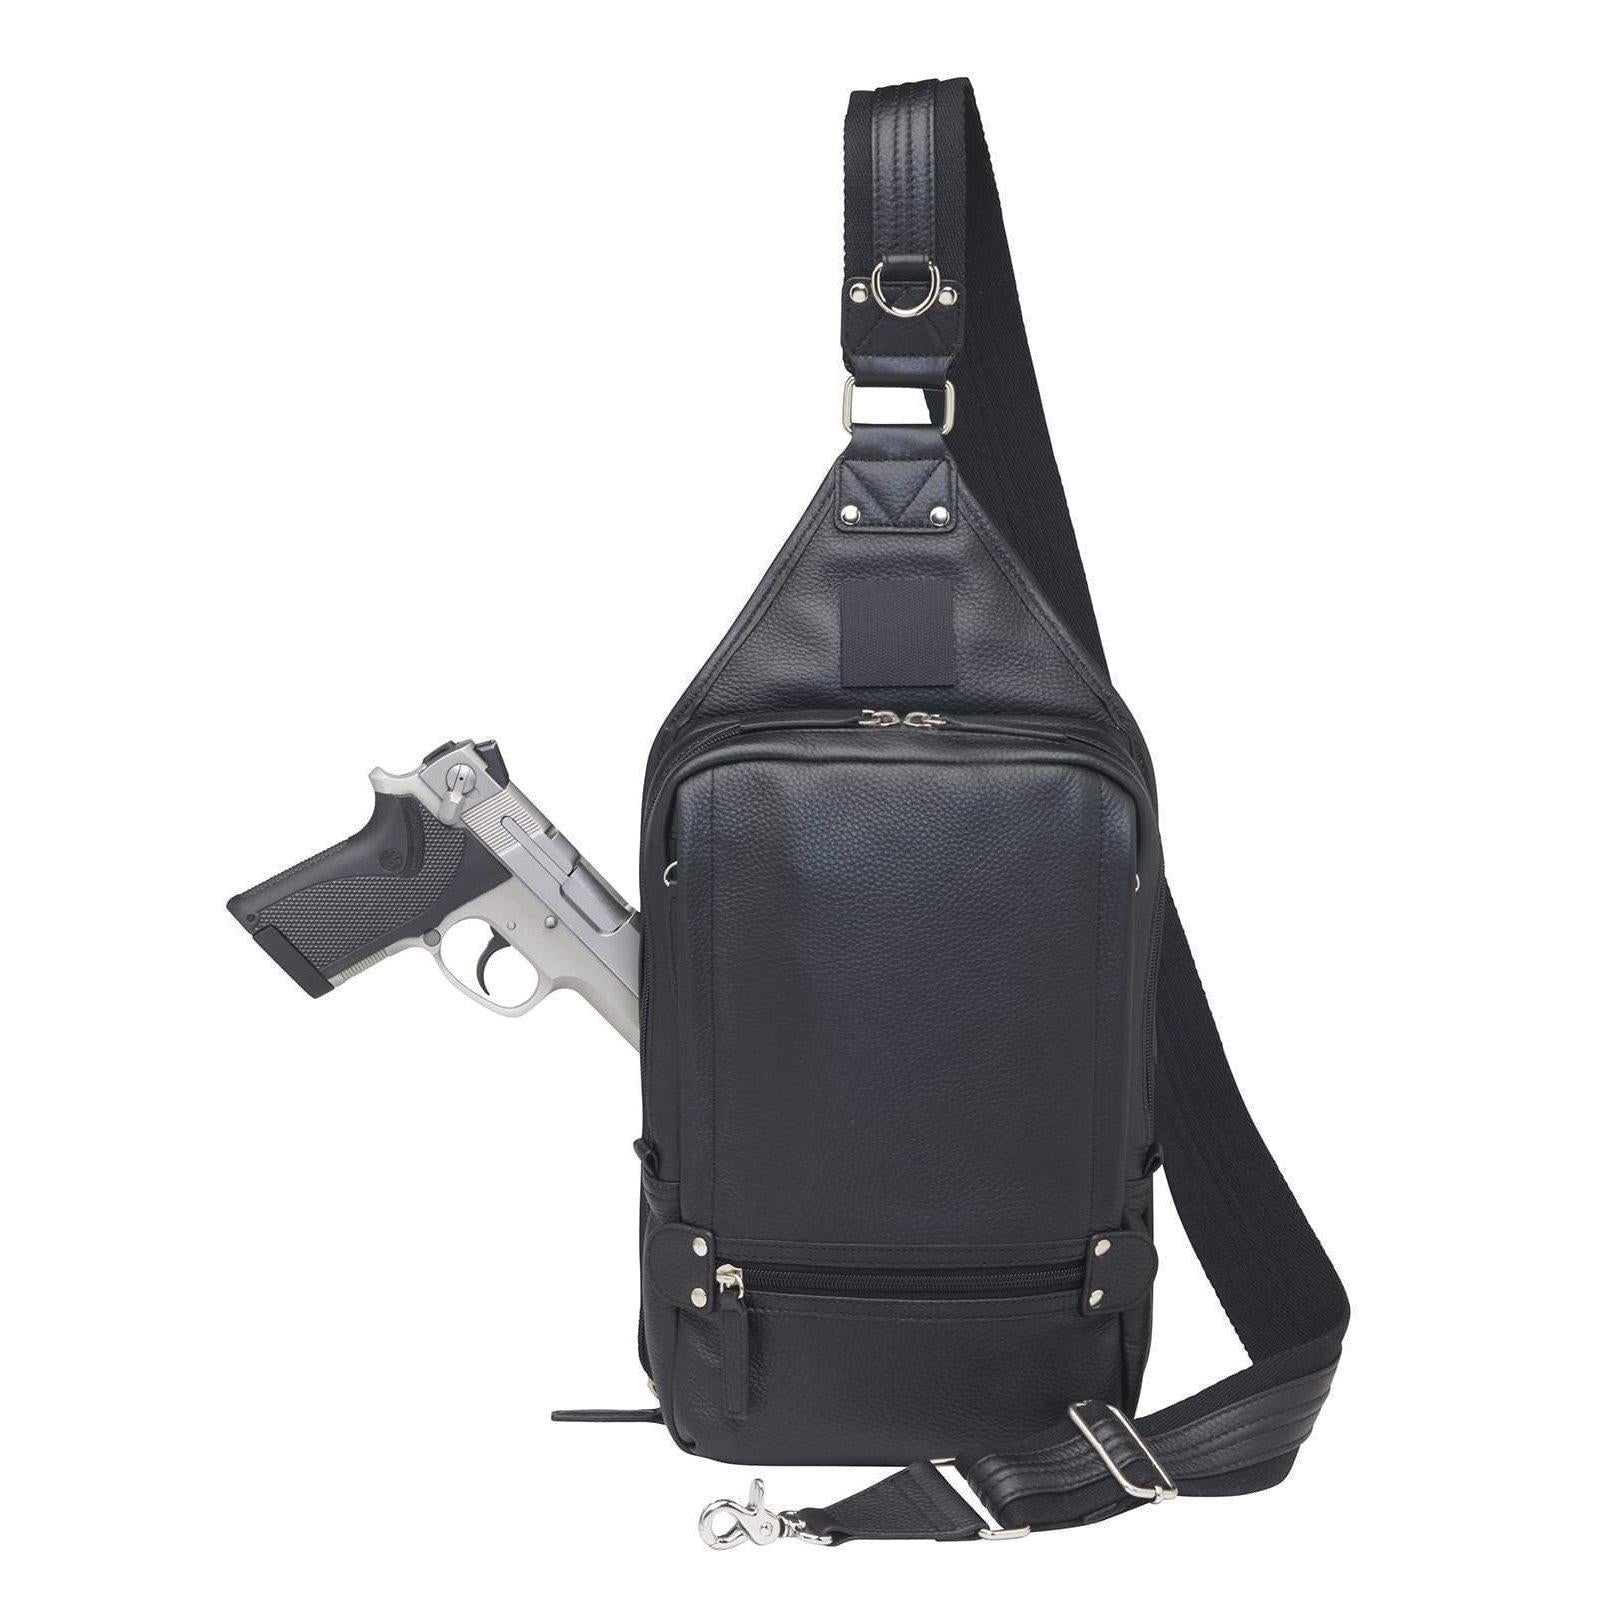 Kelty concealed carry sling bag 